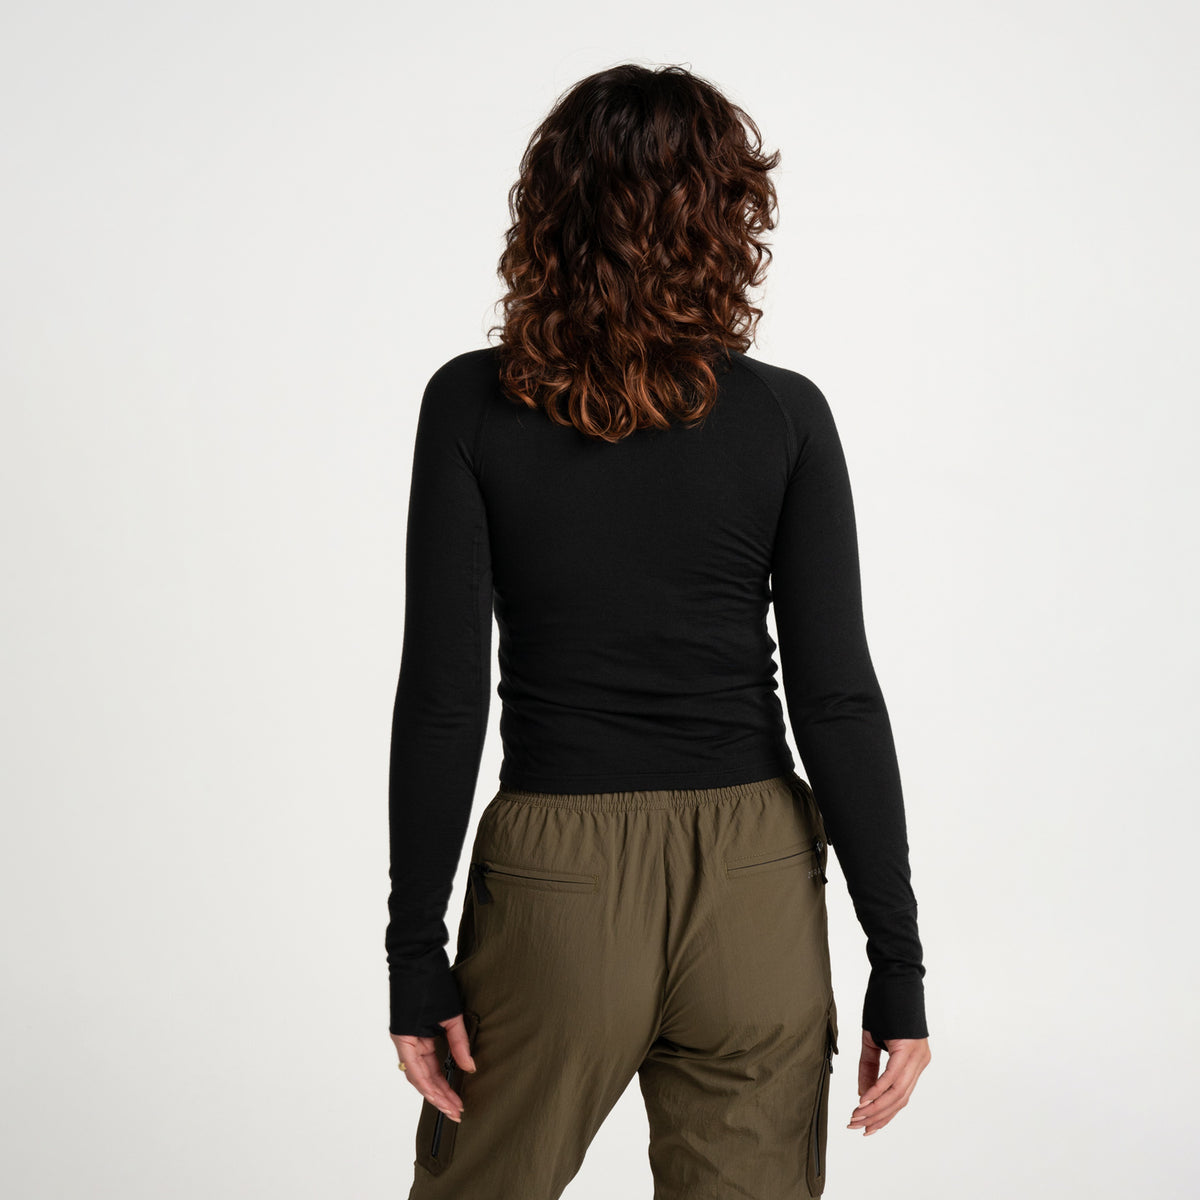 Women's Merino Wool Base Layer Set Charcoal Grey